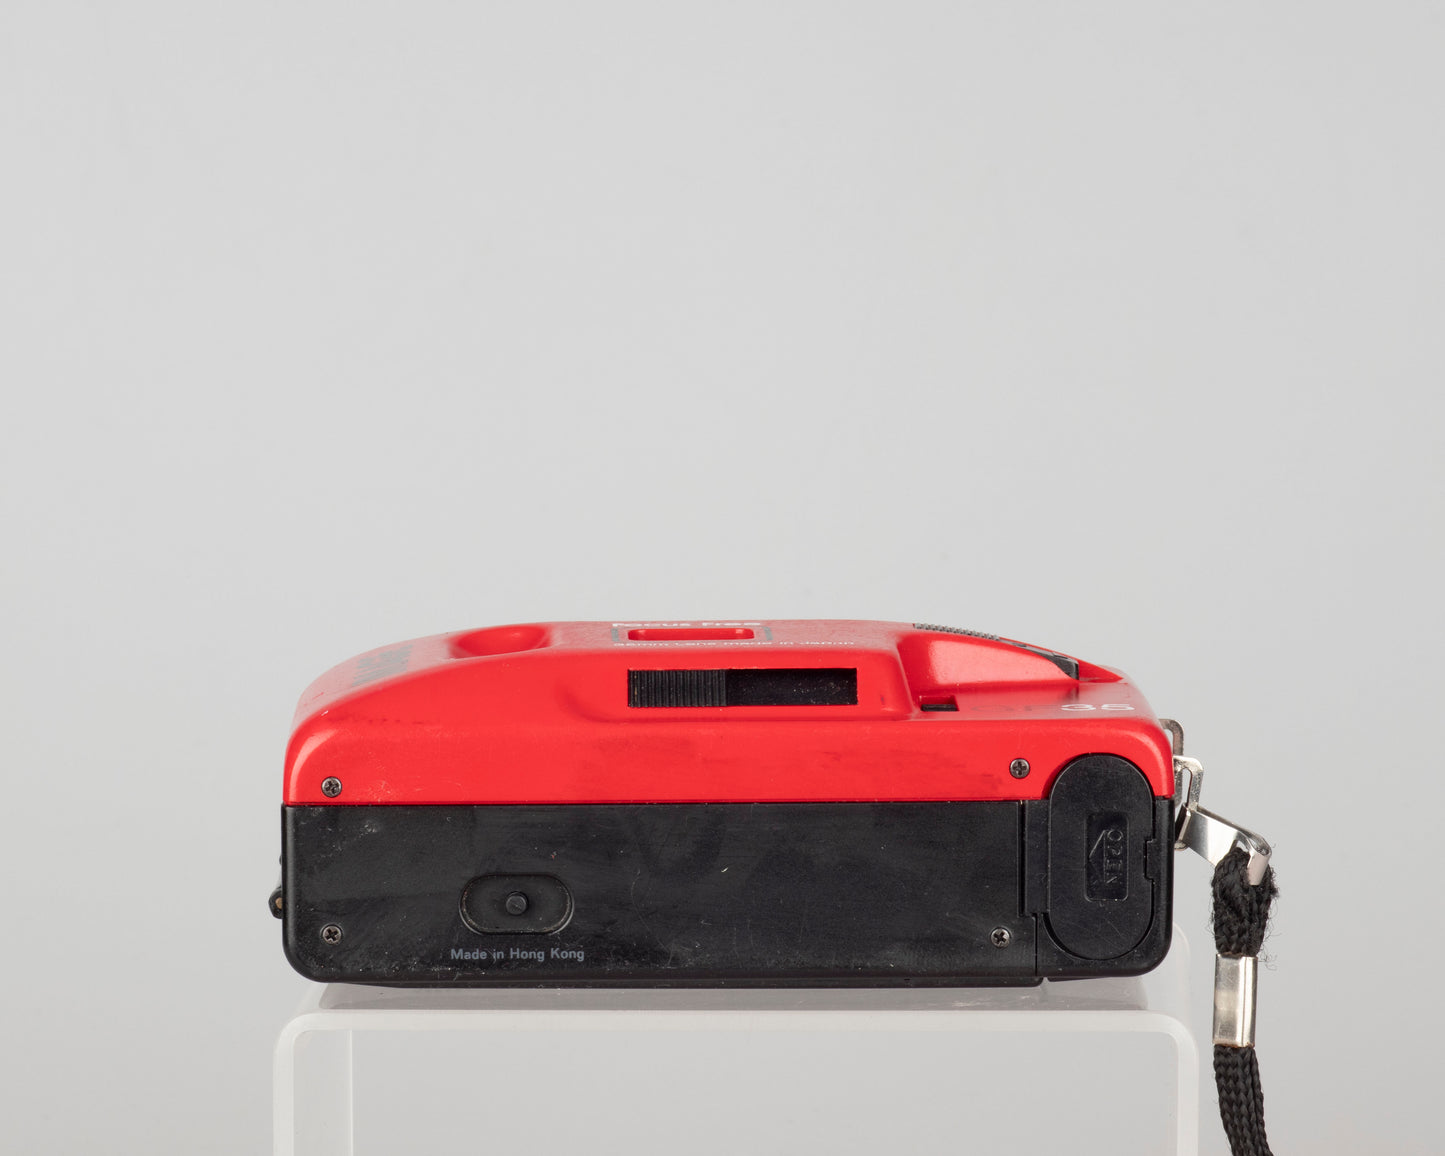 Image GF35 35mm camera (red version)